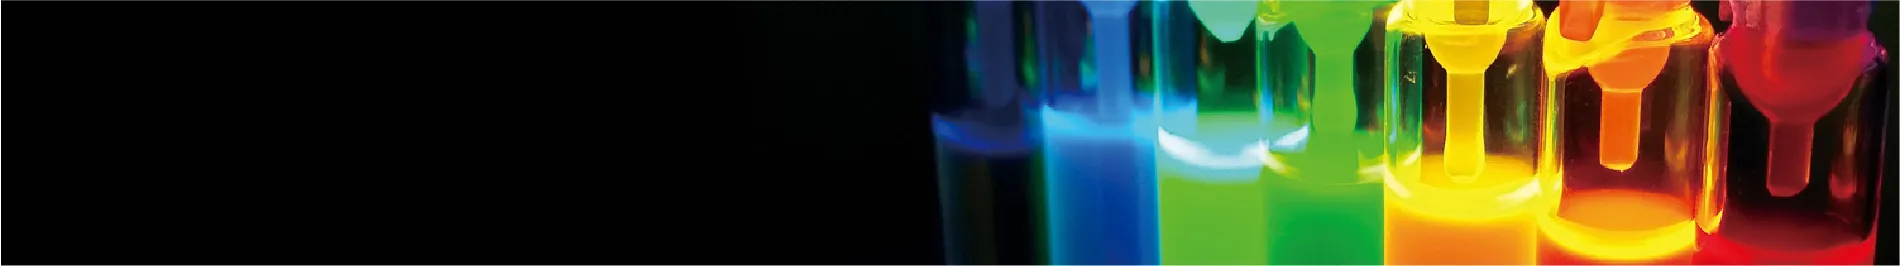 Horiba Fluorescence Spectroscopy Header